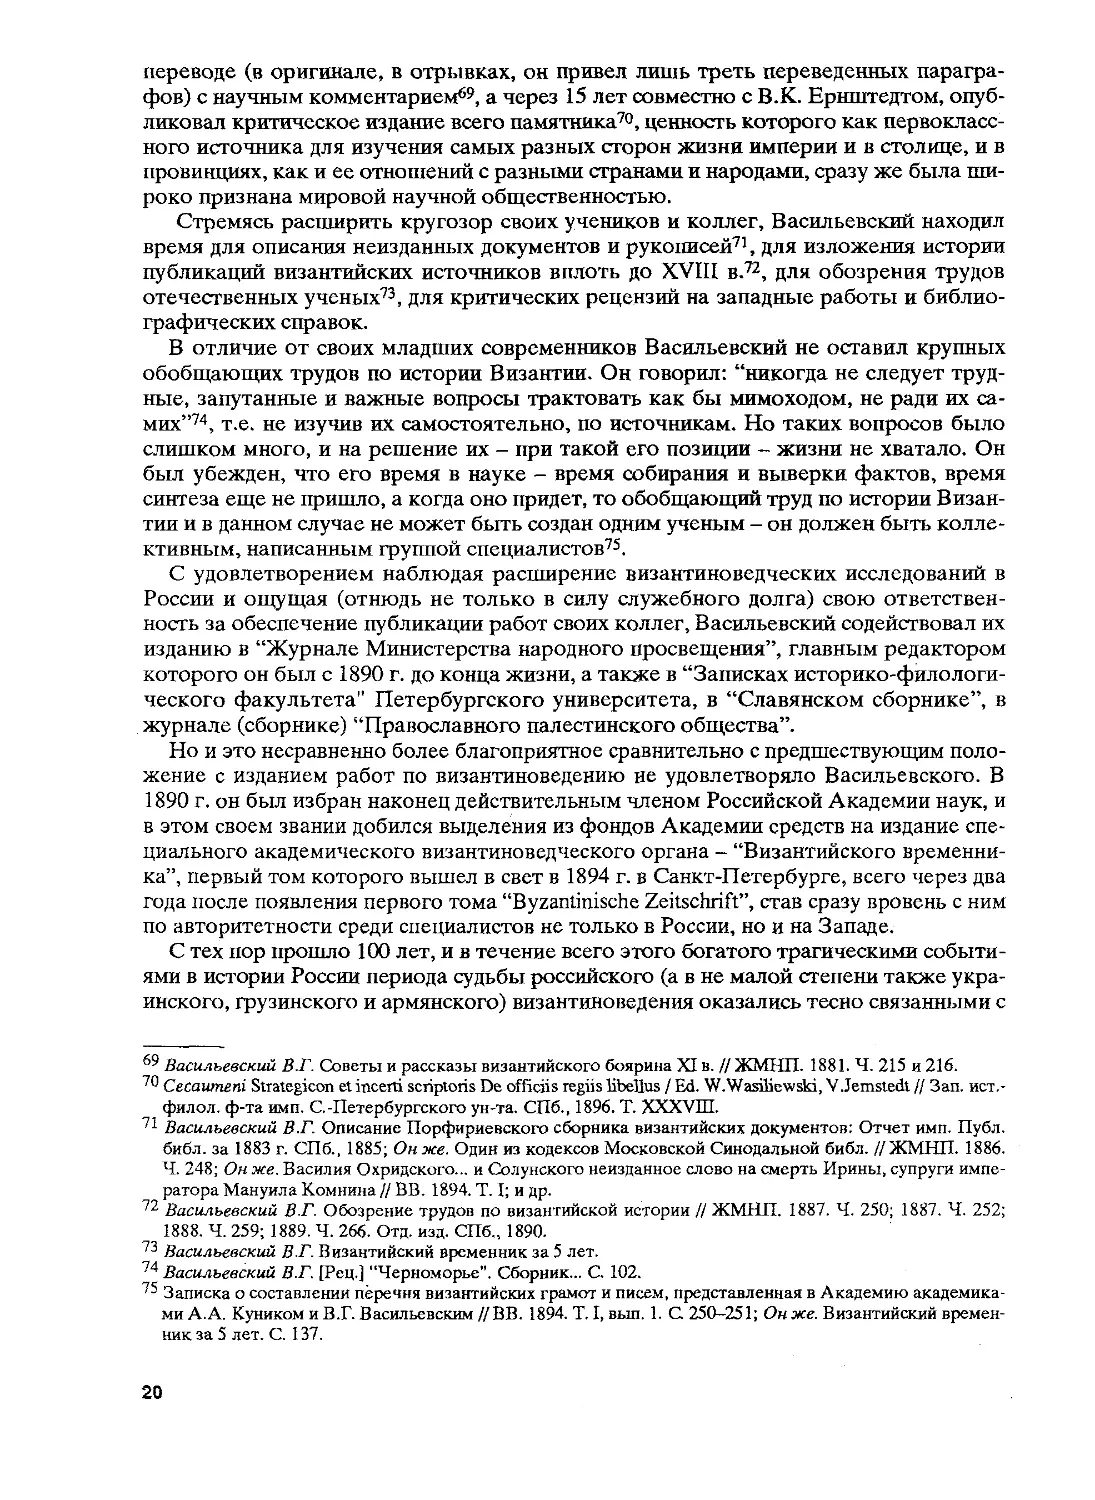 BB 55_1 Á994ù 20.pdf